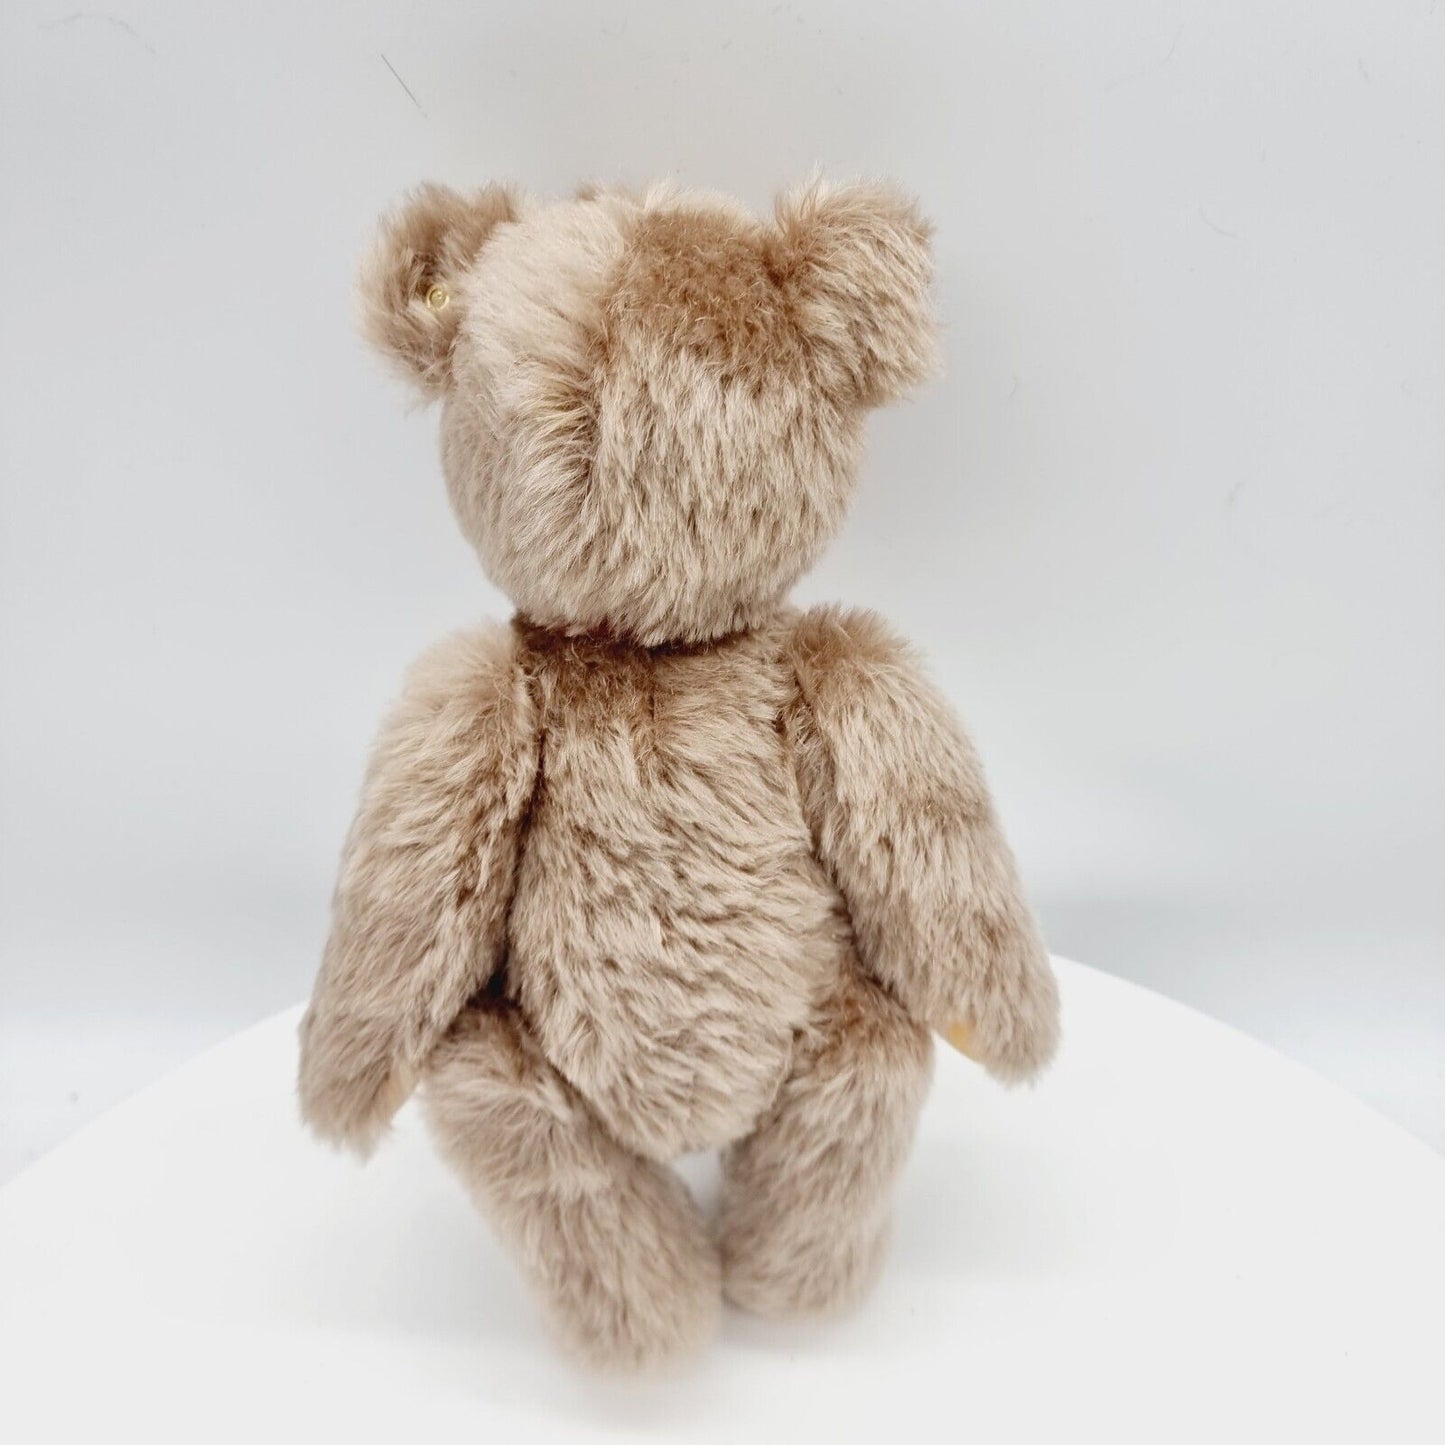 Steiff Teddybär 0228/33  33 cm grau mit roter Schleife